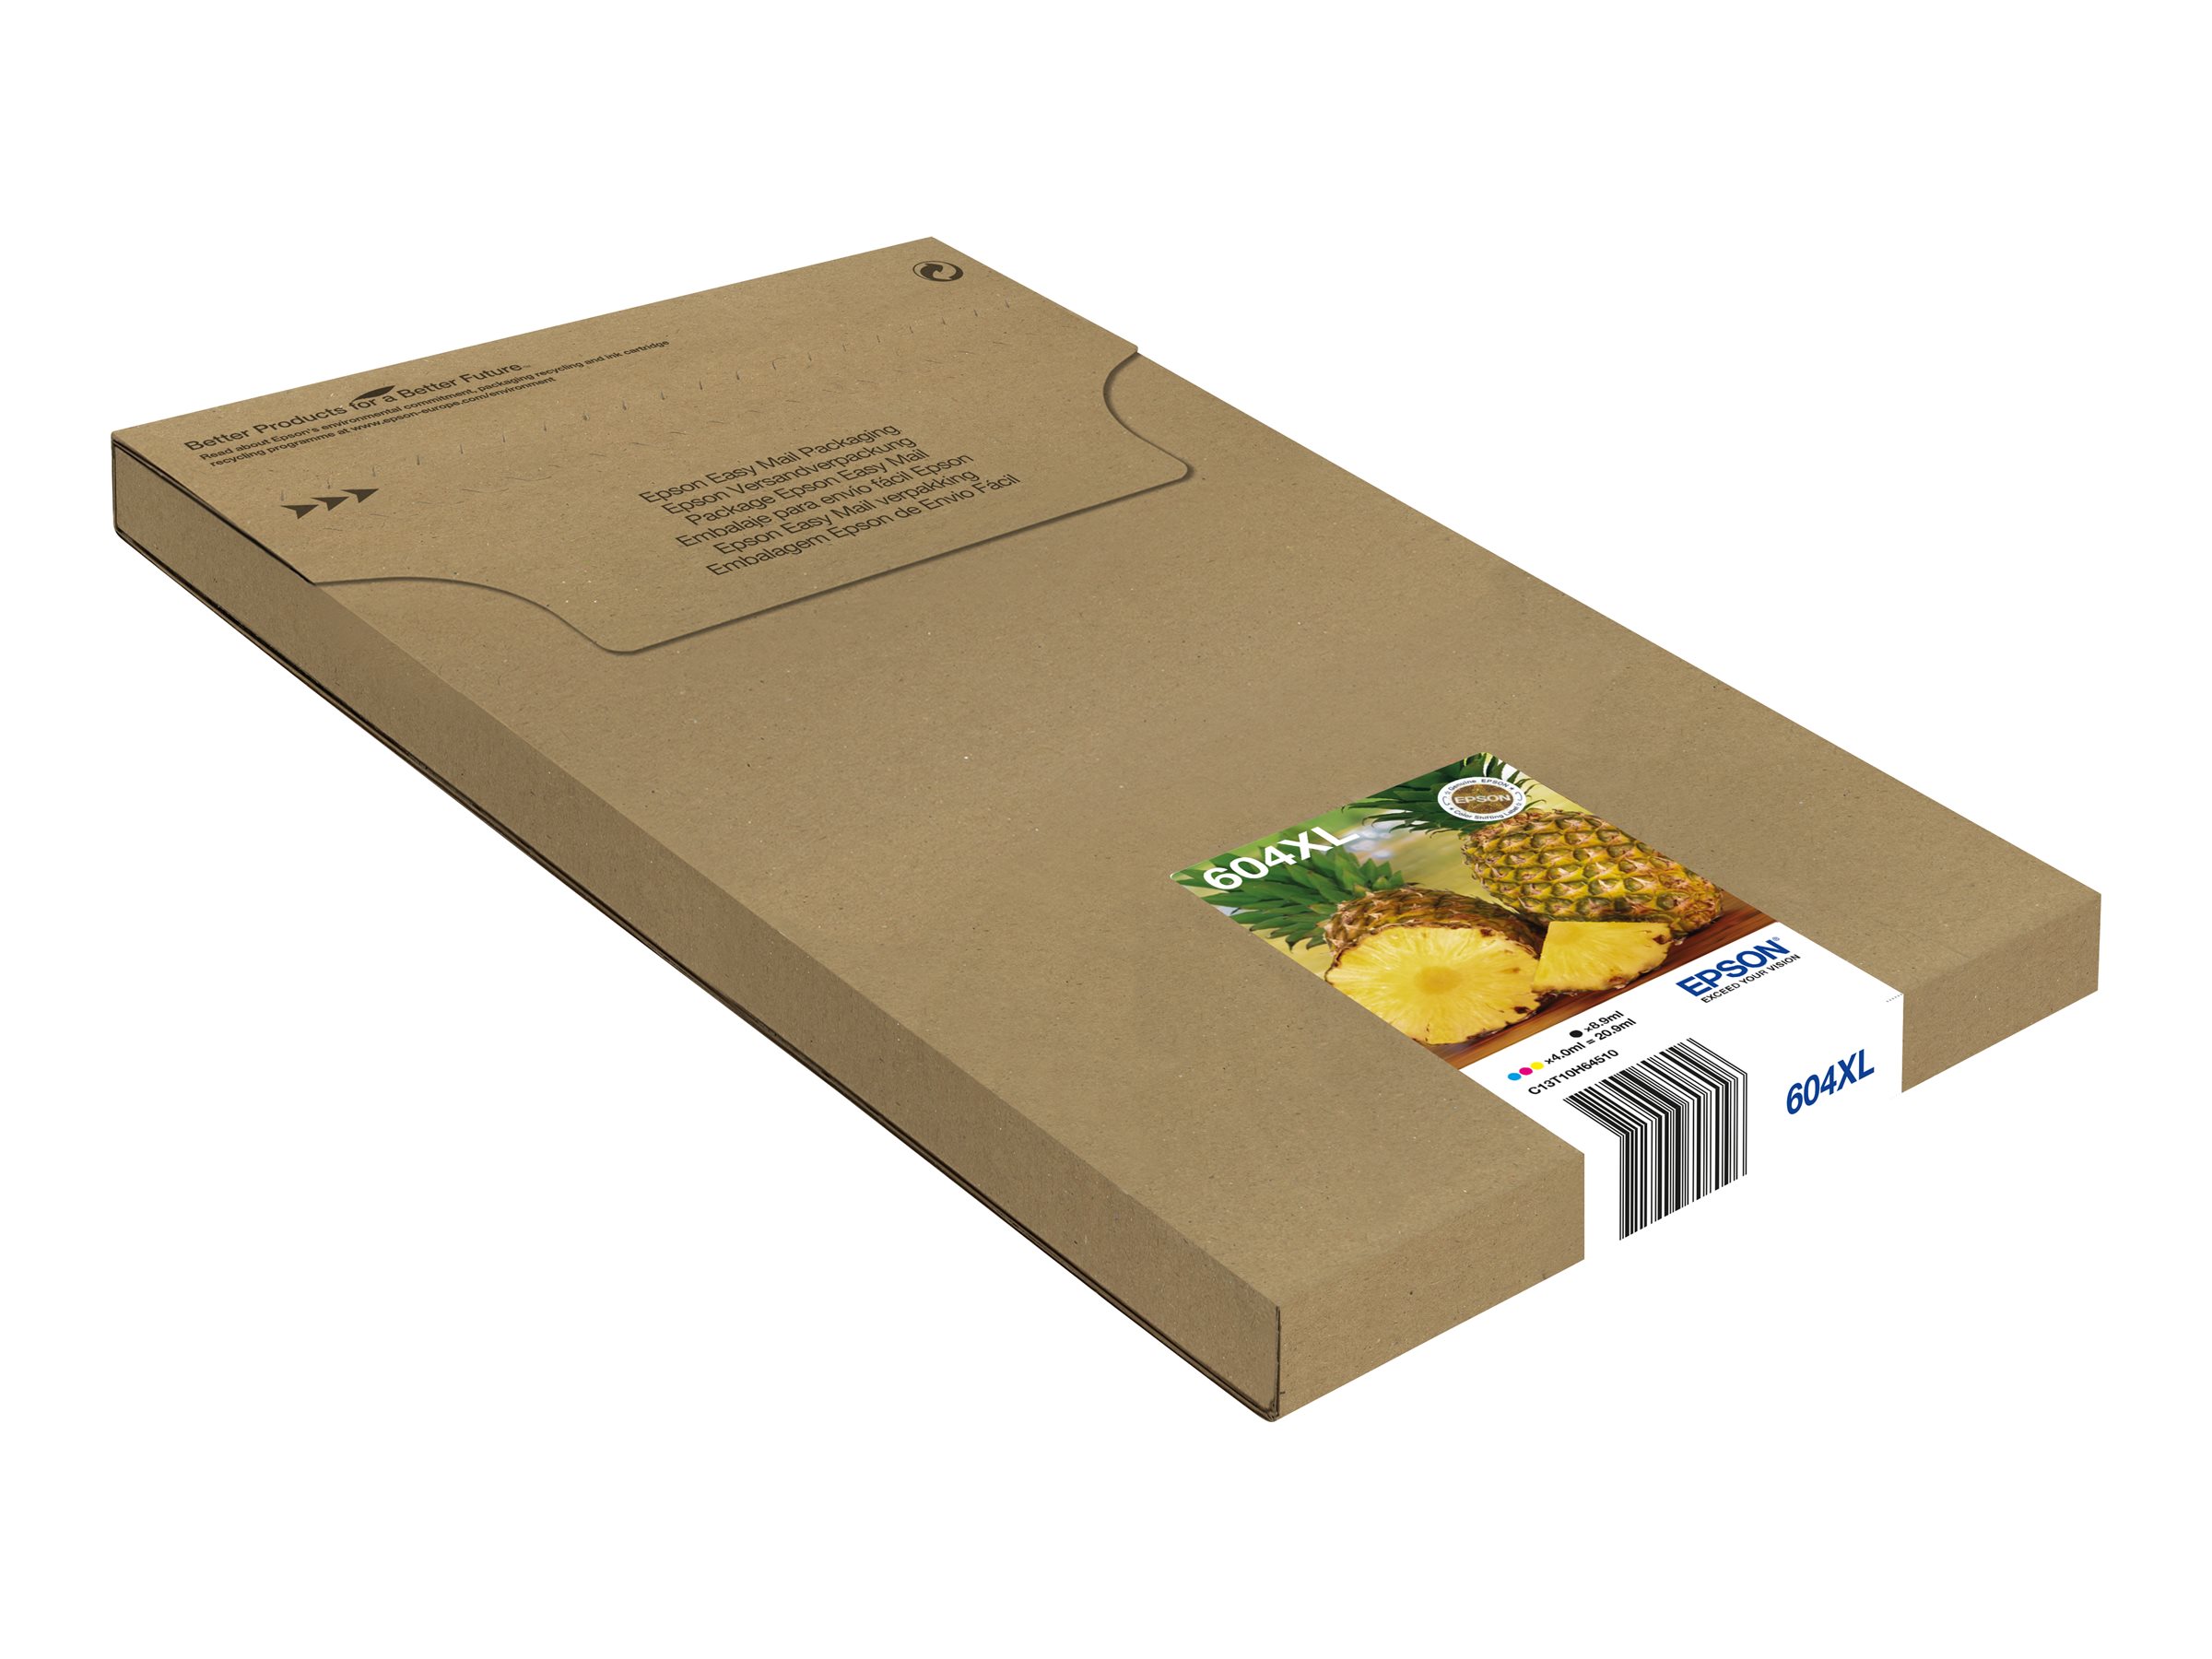 Epson 604XL Multipack Easy Mail Packaging - 4er-Pack